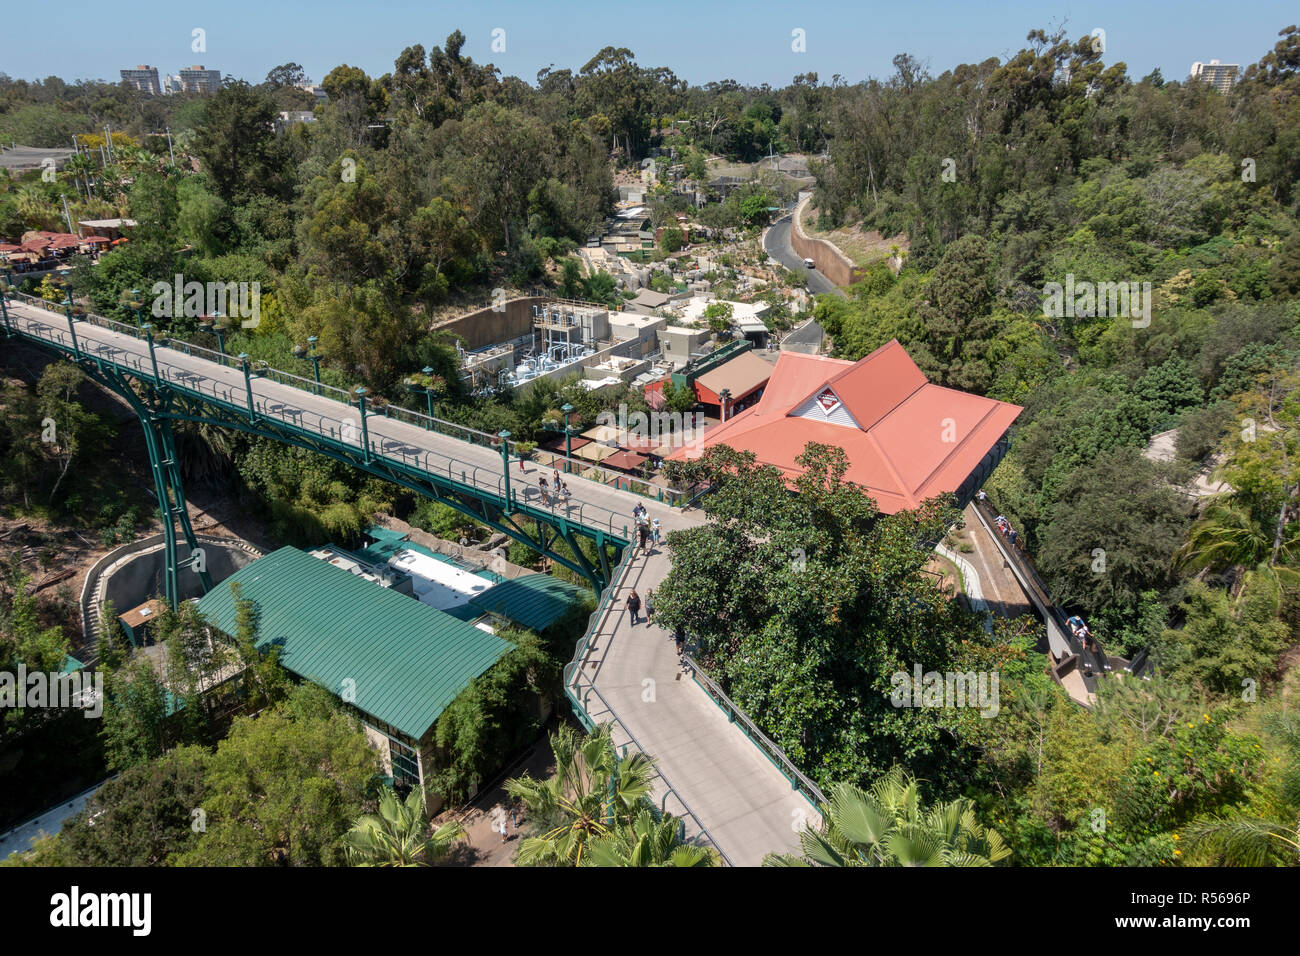 View of Bashor Bridge from the Skyfari aerial tram/cable car, San Diego Zoo, Balboa Park, California, United States. Stock Photo